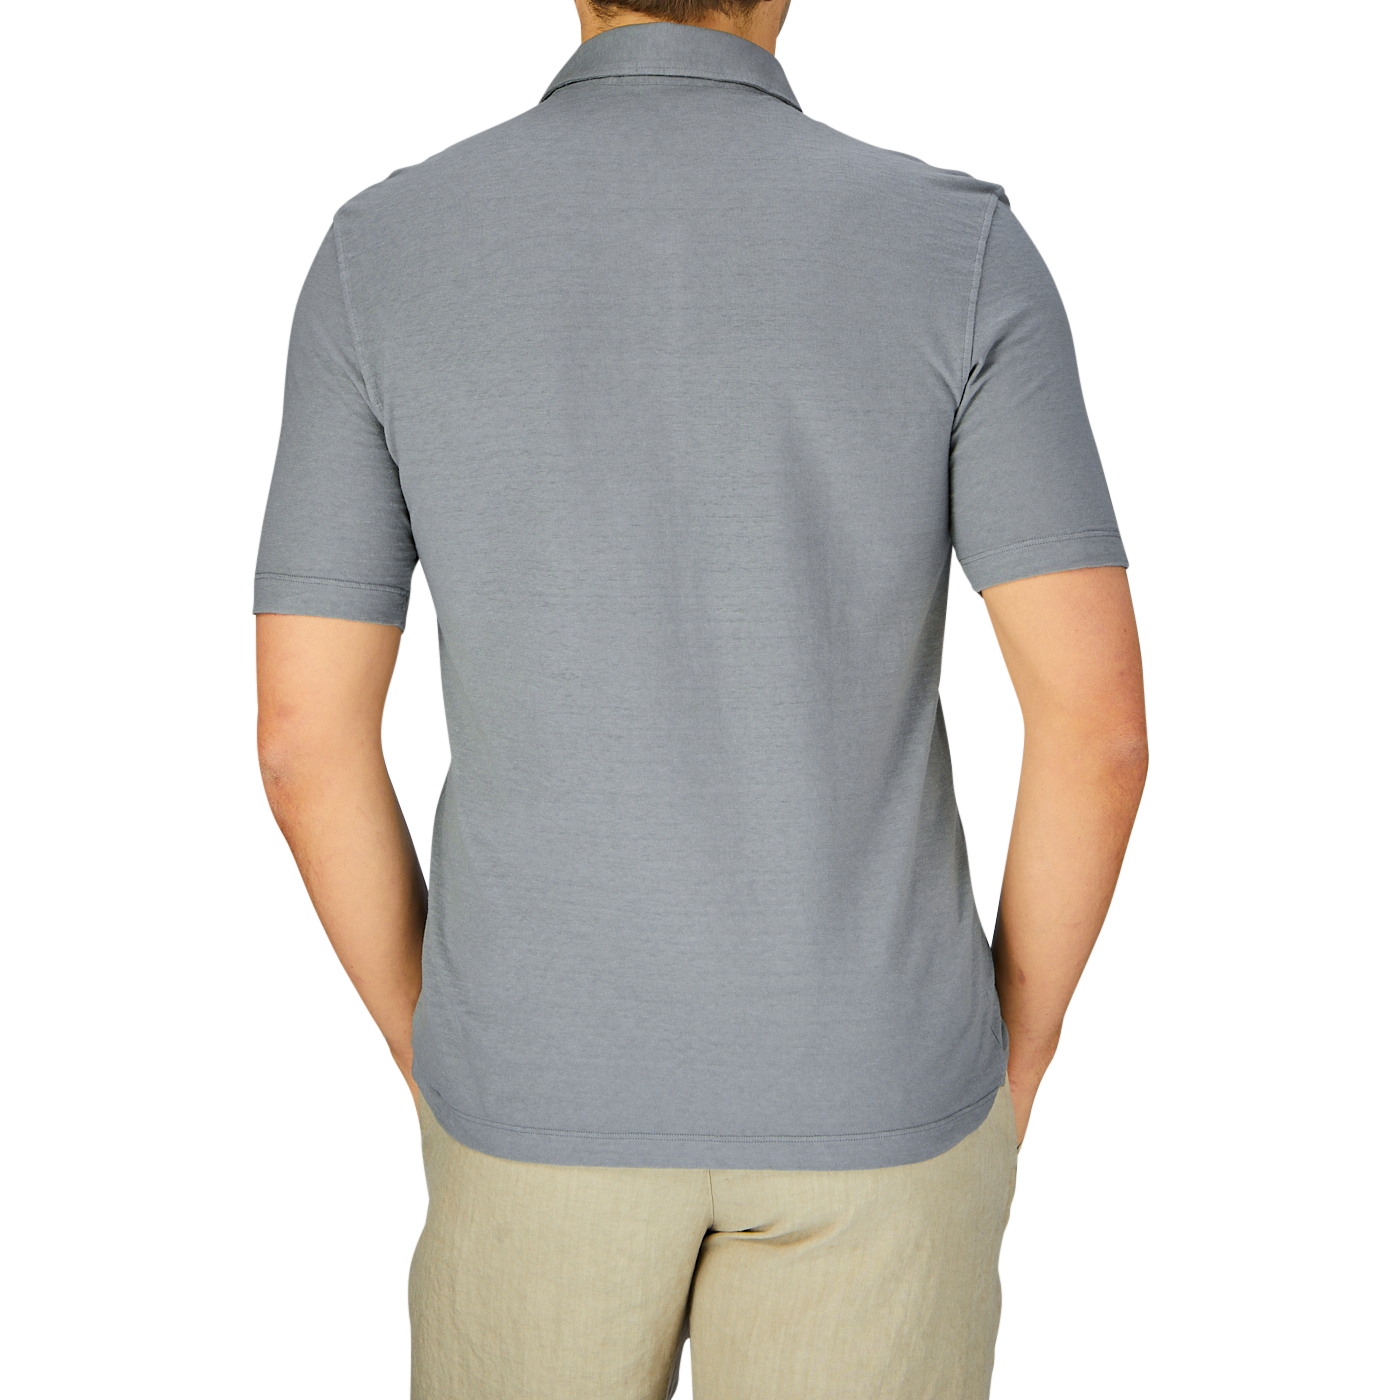 Rear view of a man wearing a Drumohr Steel Grey Cotton Linen Polo Shirt and khaki pants.